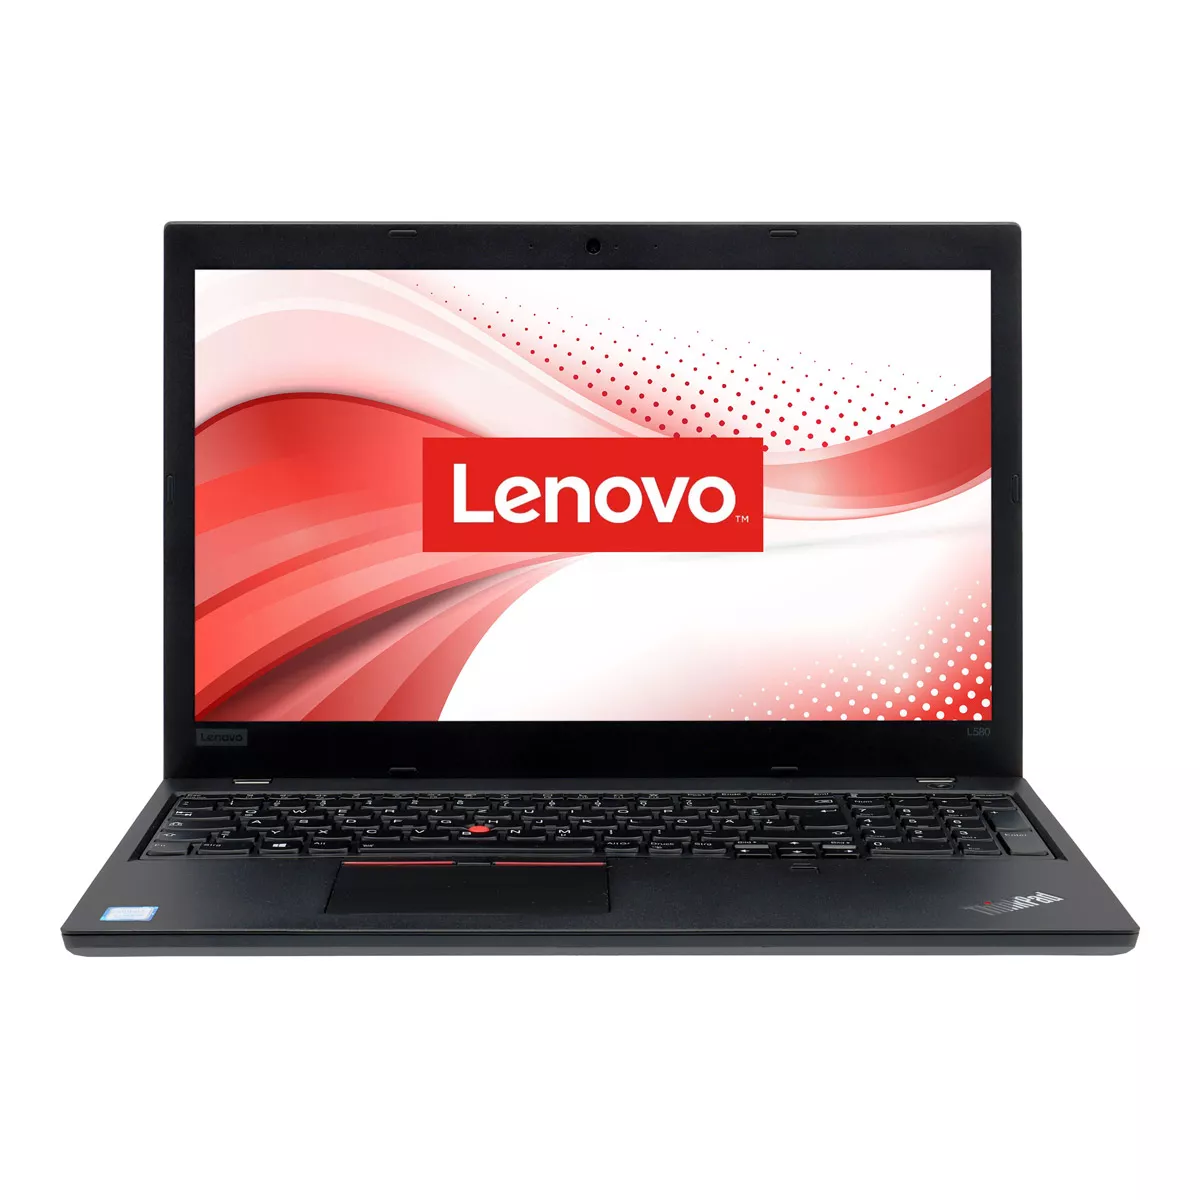 Lenovo ThinkPad L580 Core i5 8350U Full-HD 240 GB M.2 nVME SSD Webcam A+